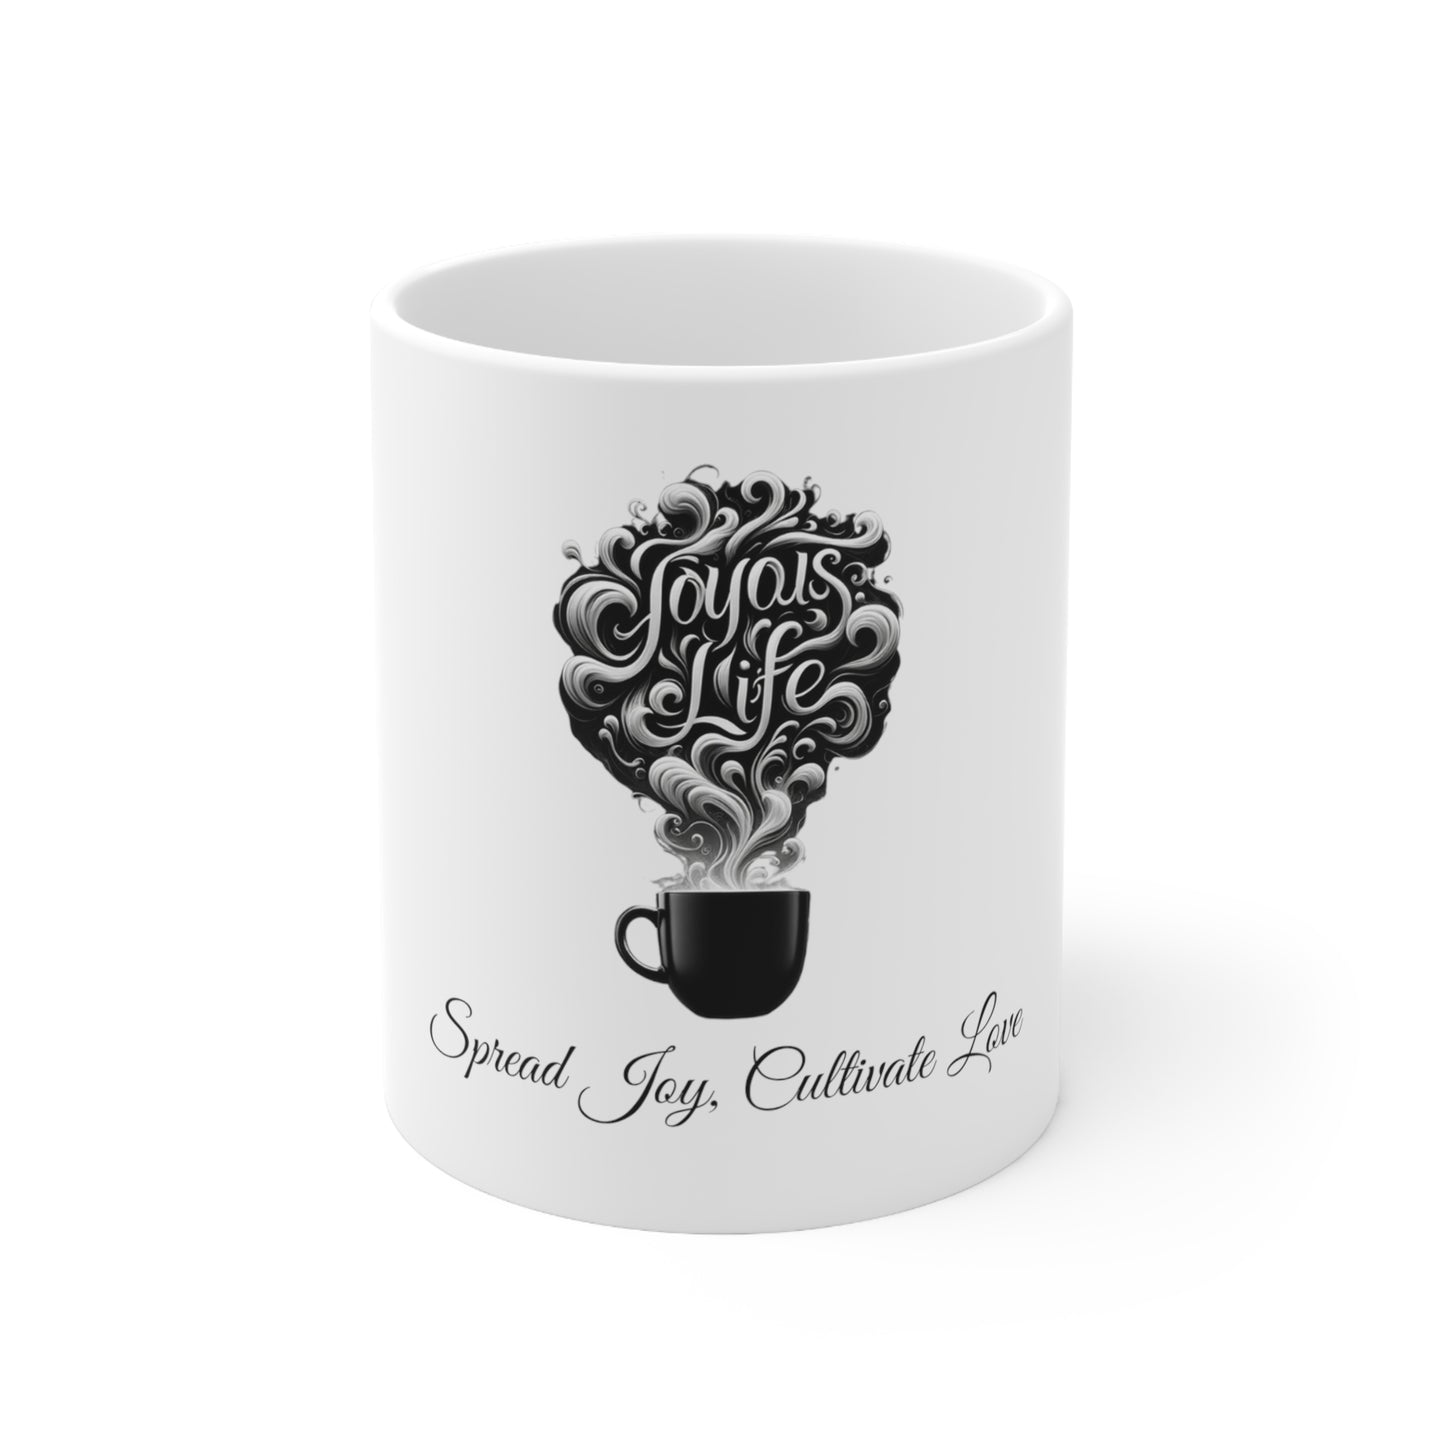 Spread Joy, Cultivate Love - Uplifting Ceramic Coffee Mug 11oz, Joyous Life Journals